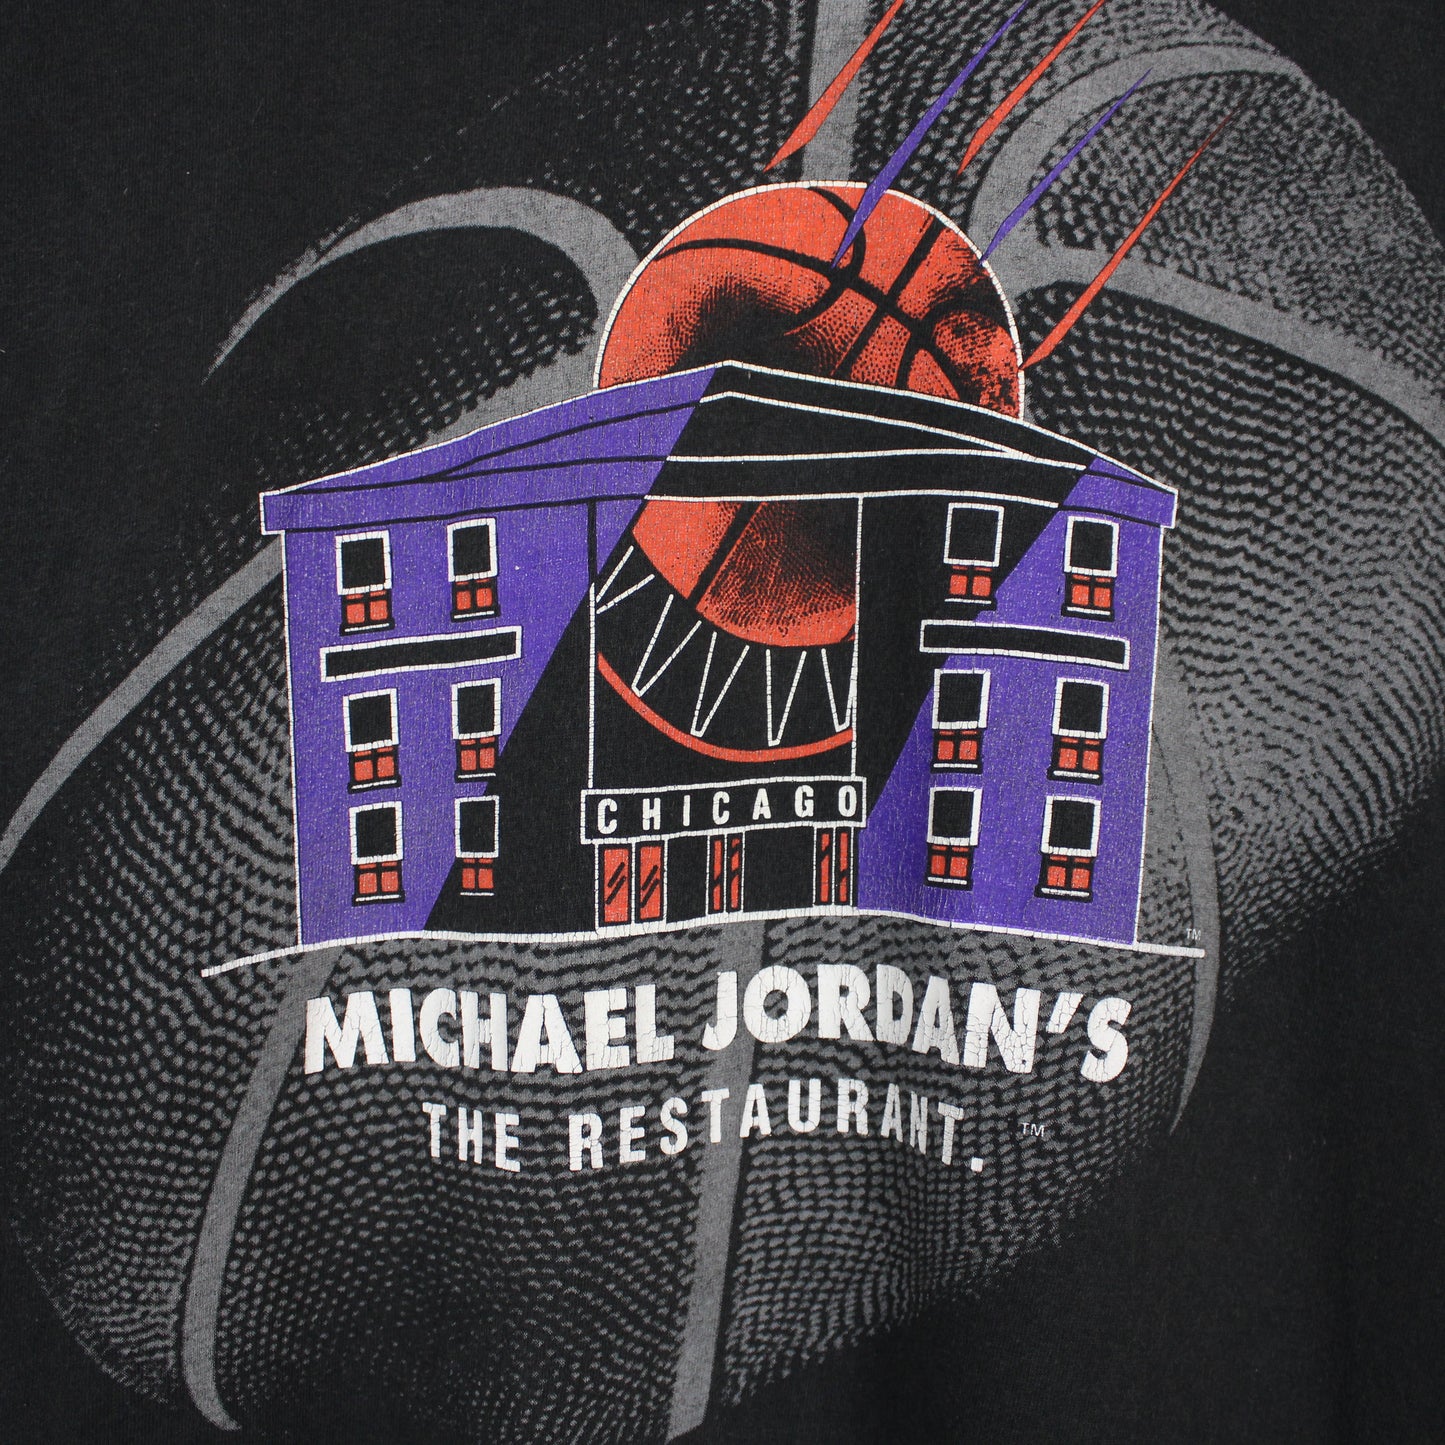 Vintage Michael Jordan's Restaurant Nike Tee - XL